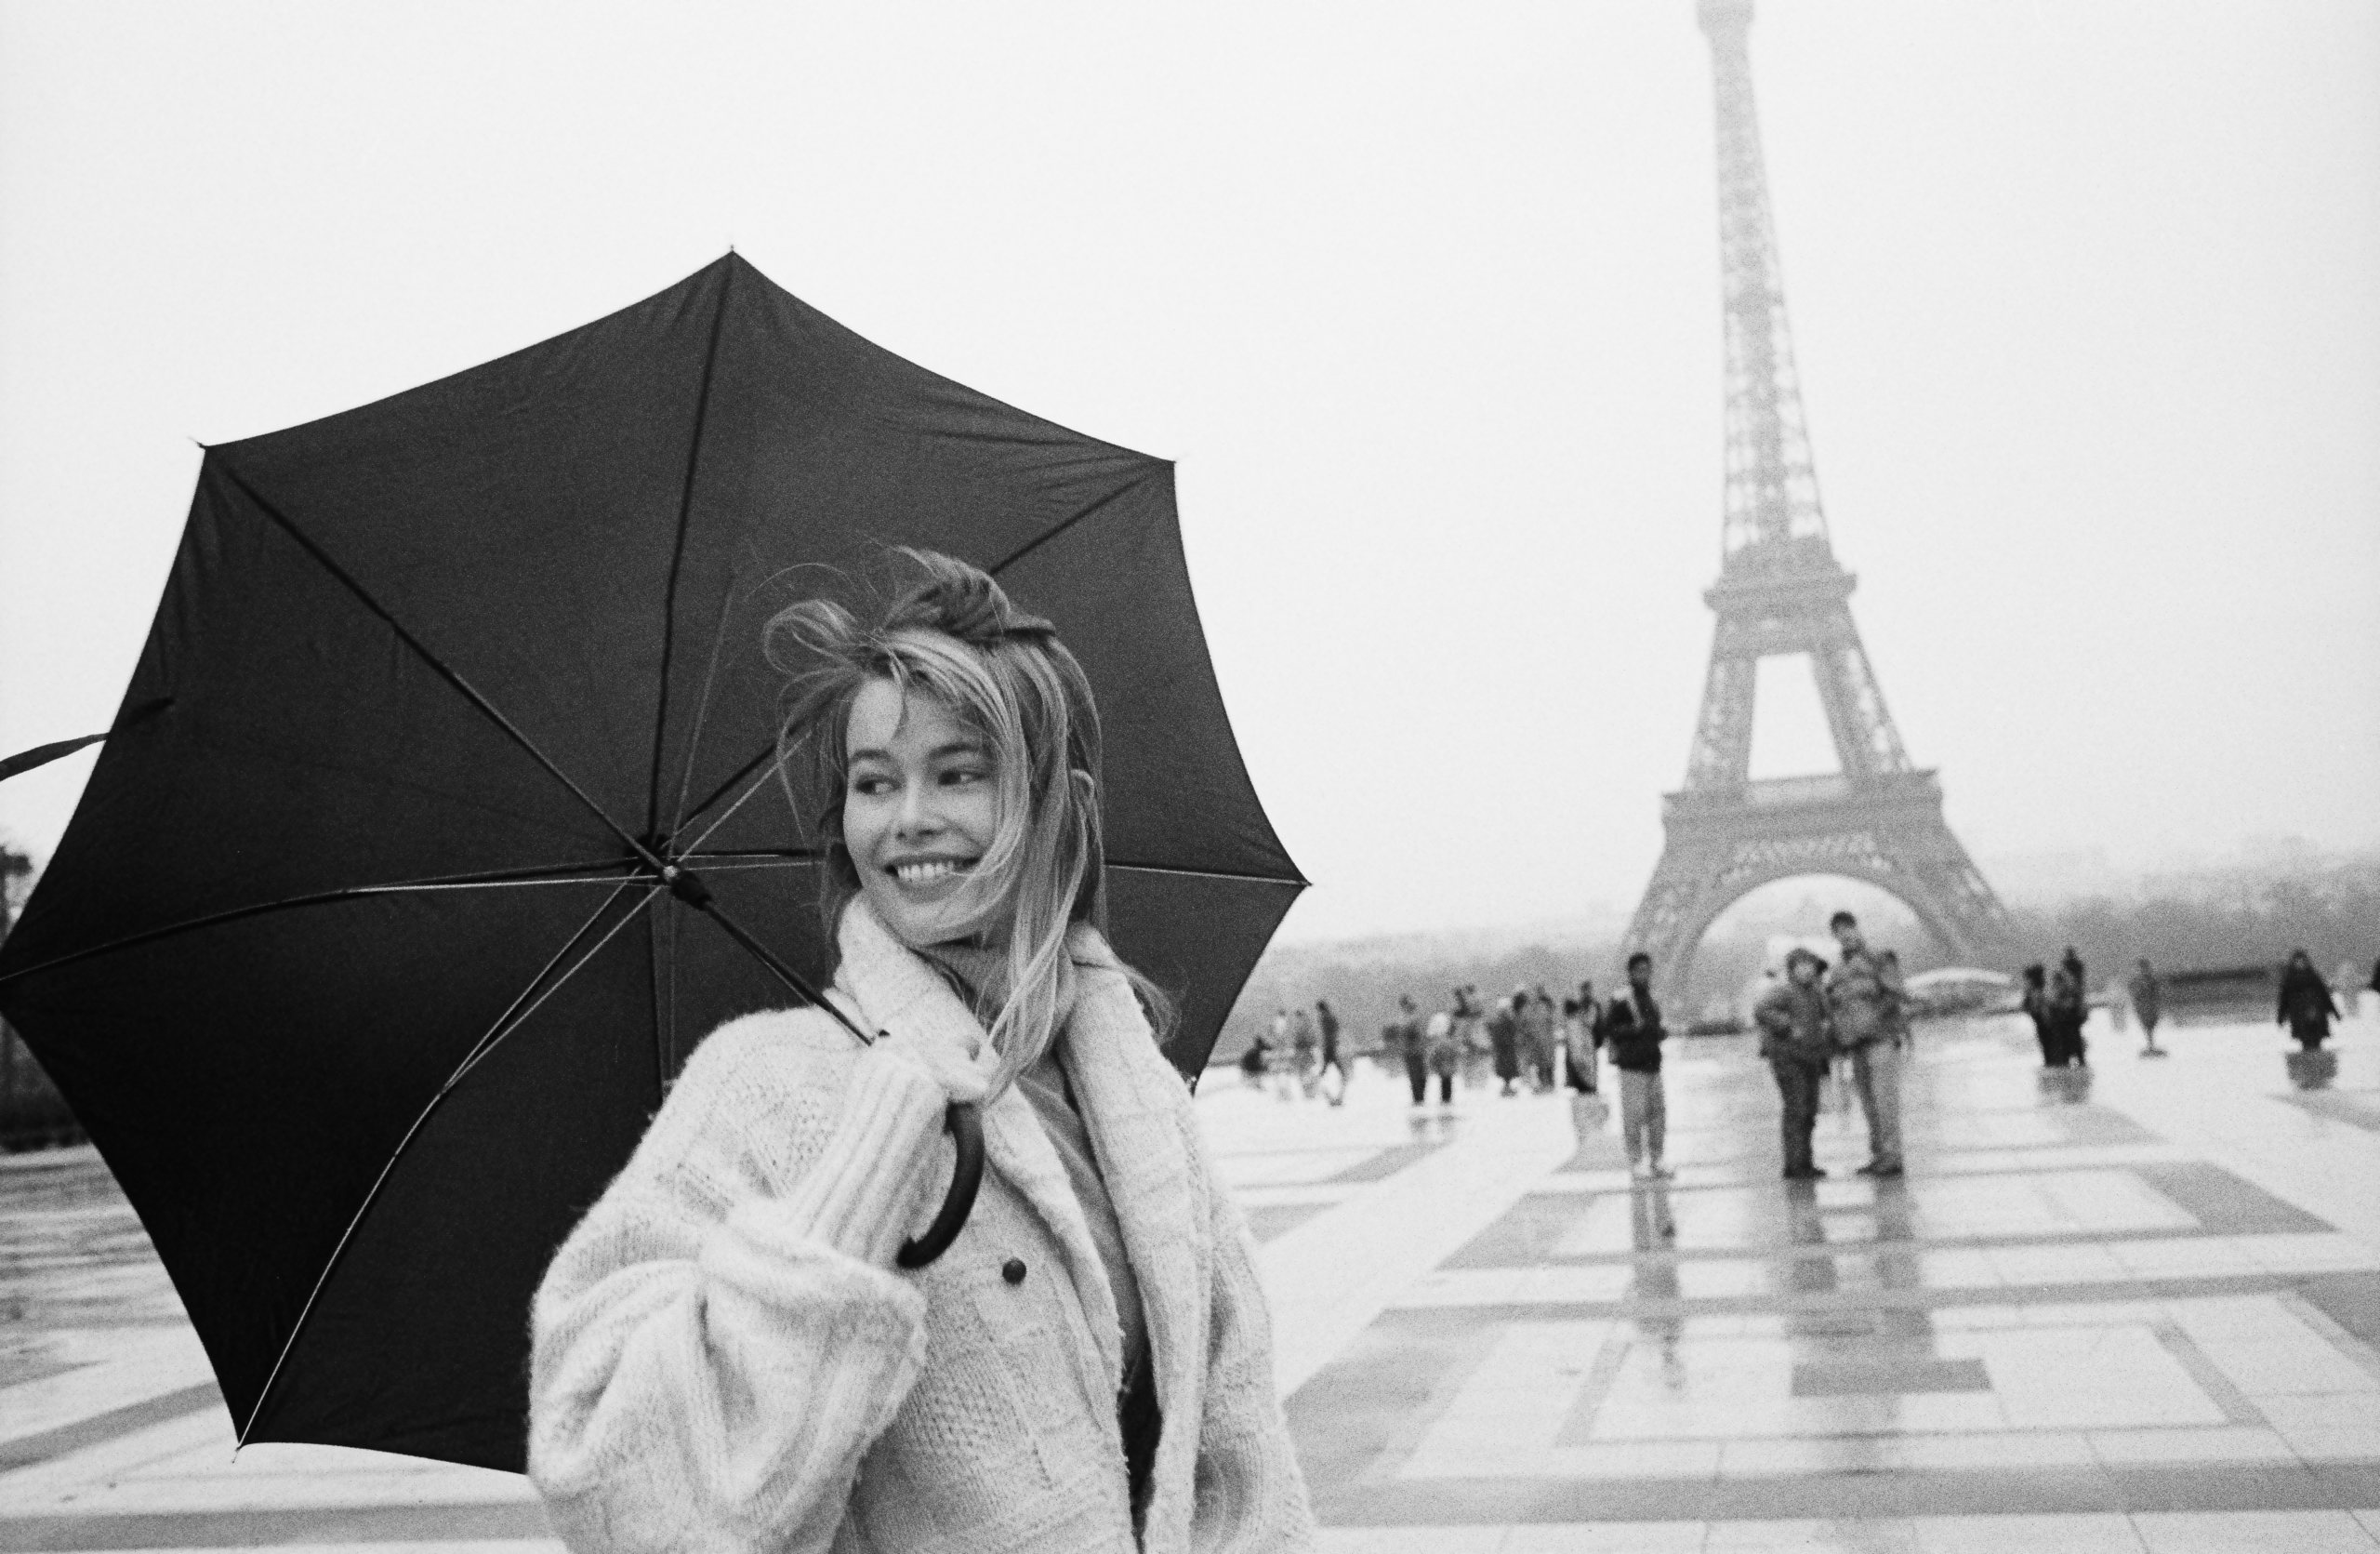 German top model Claudia Schiffer visiting Paris